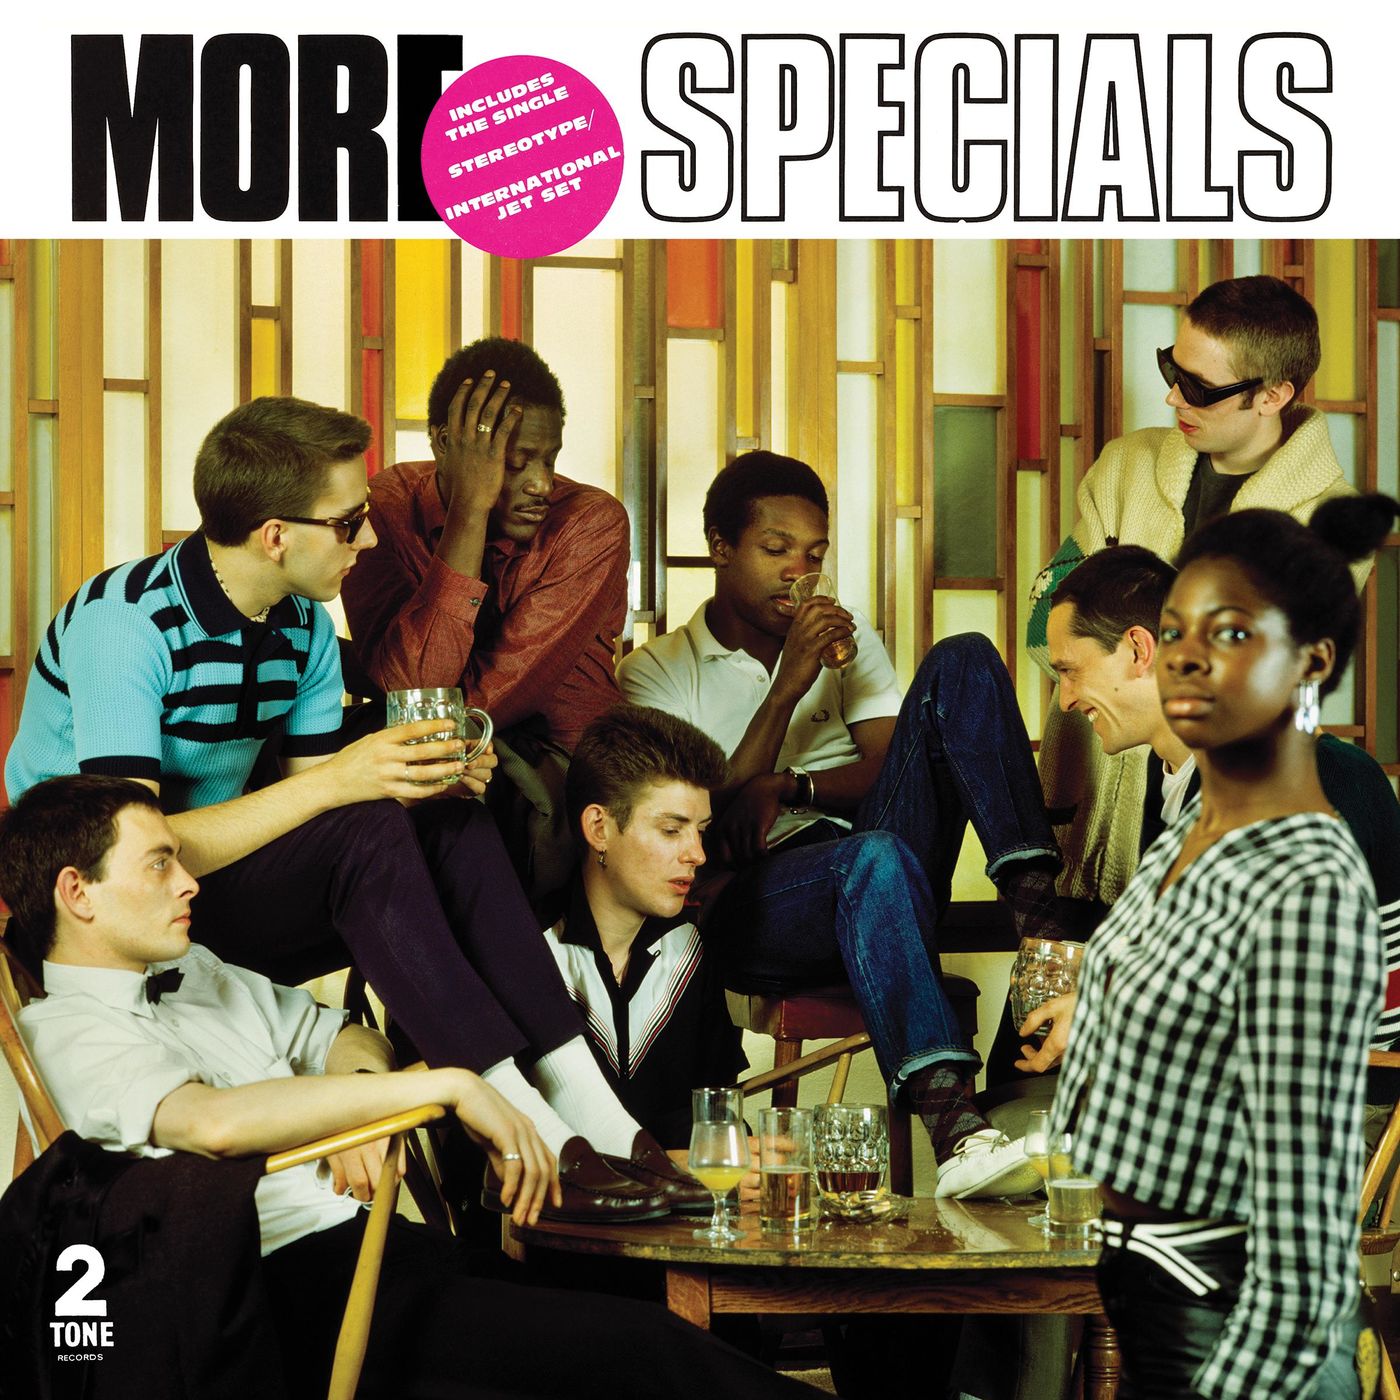 Download The Specials - More Specials [Deluxe Version] (1980/2015